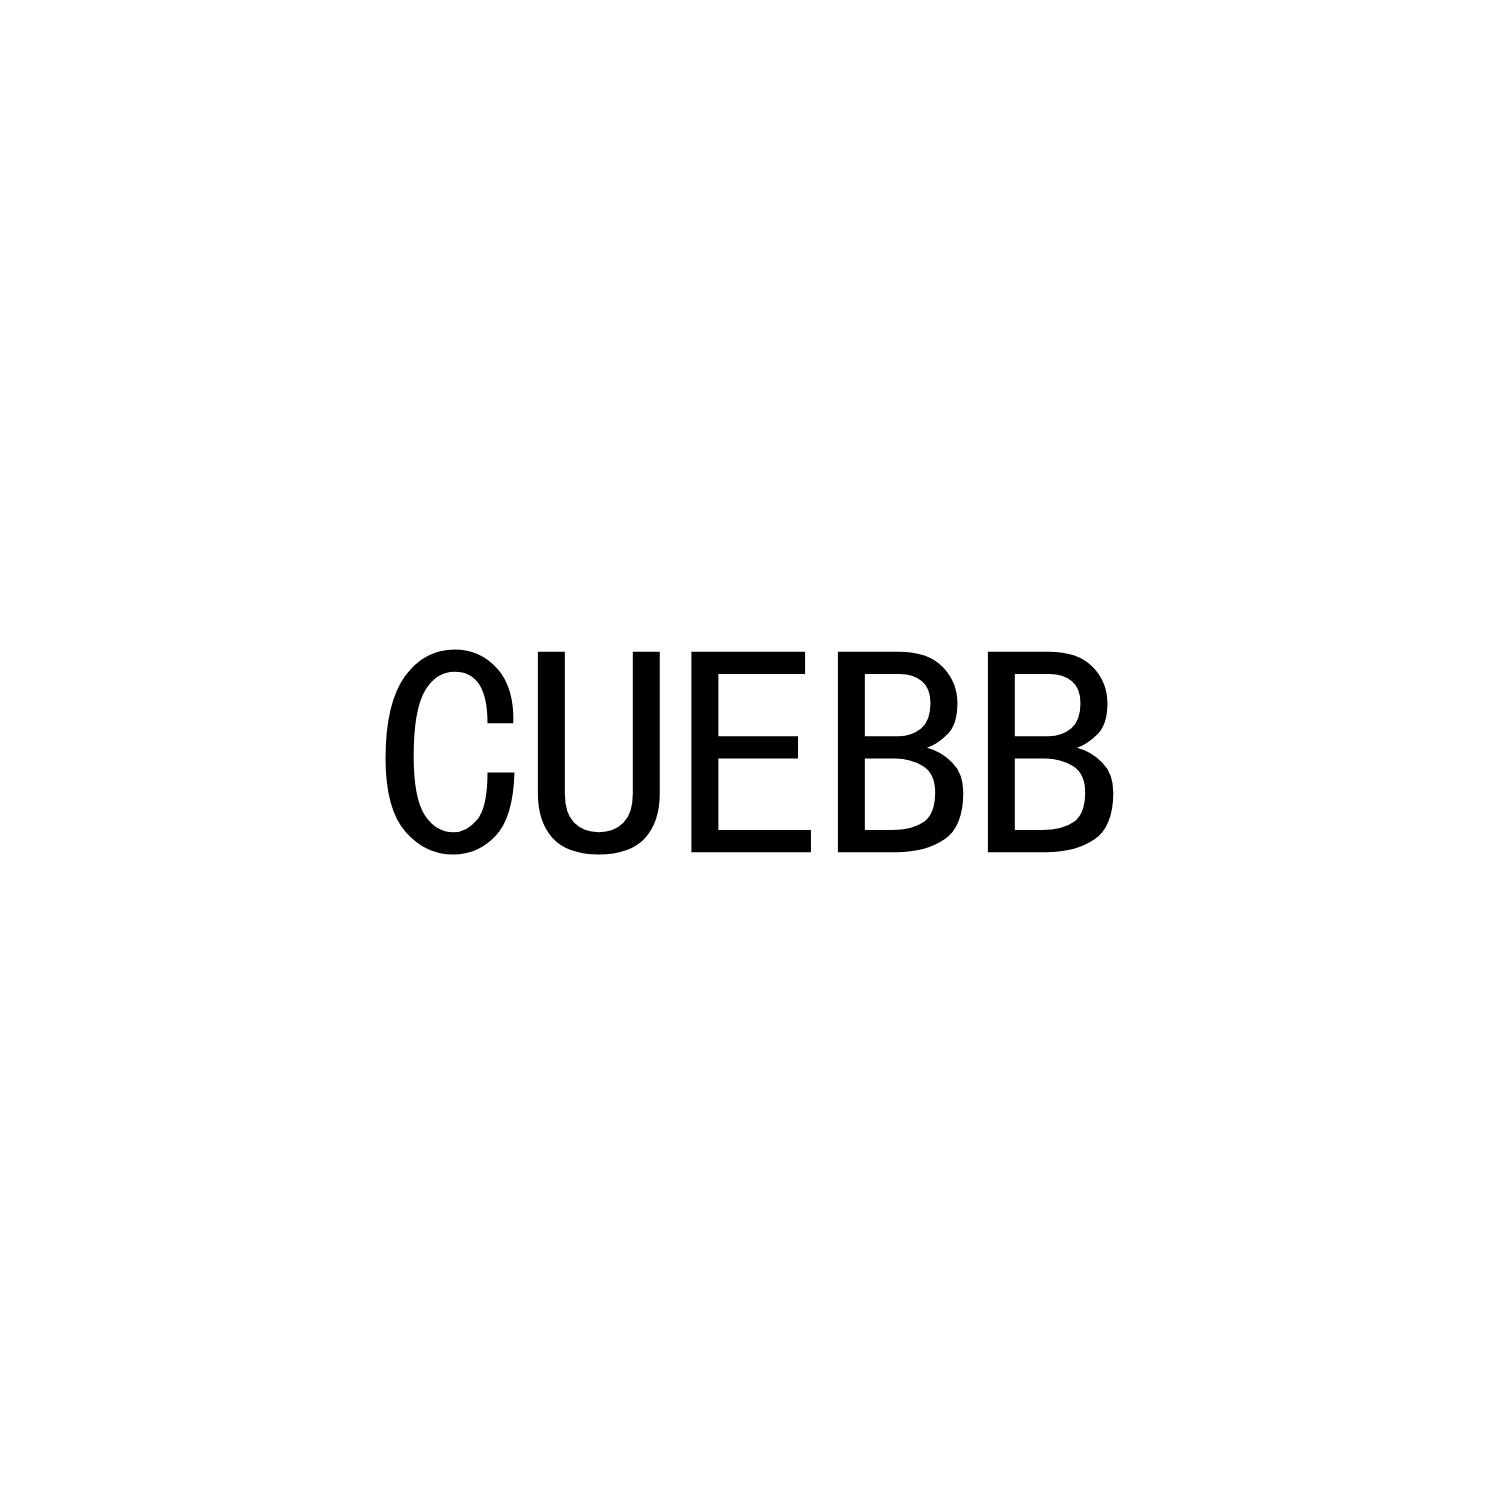 CUEBB商标转让